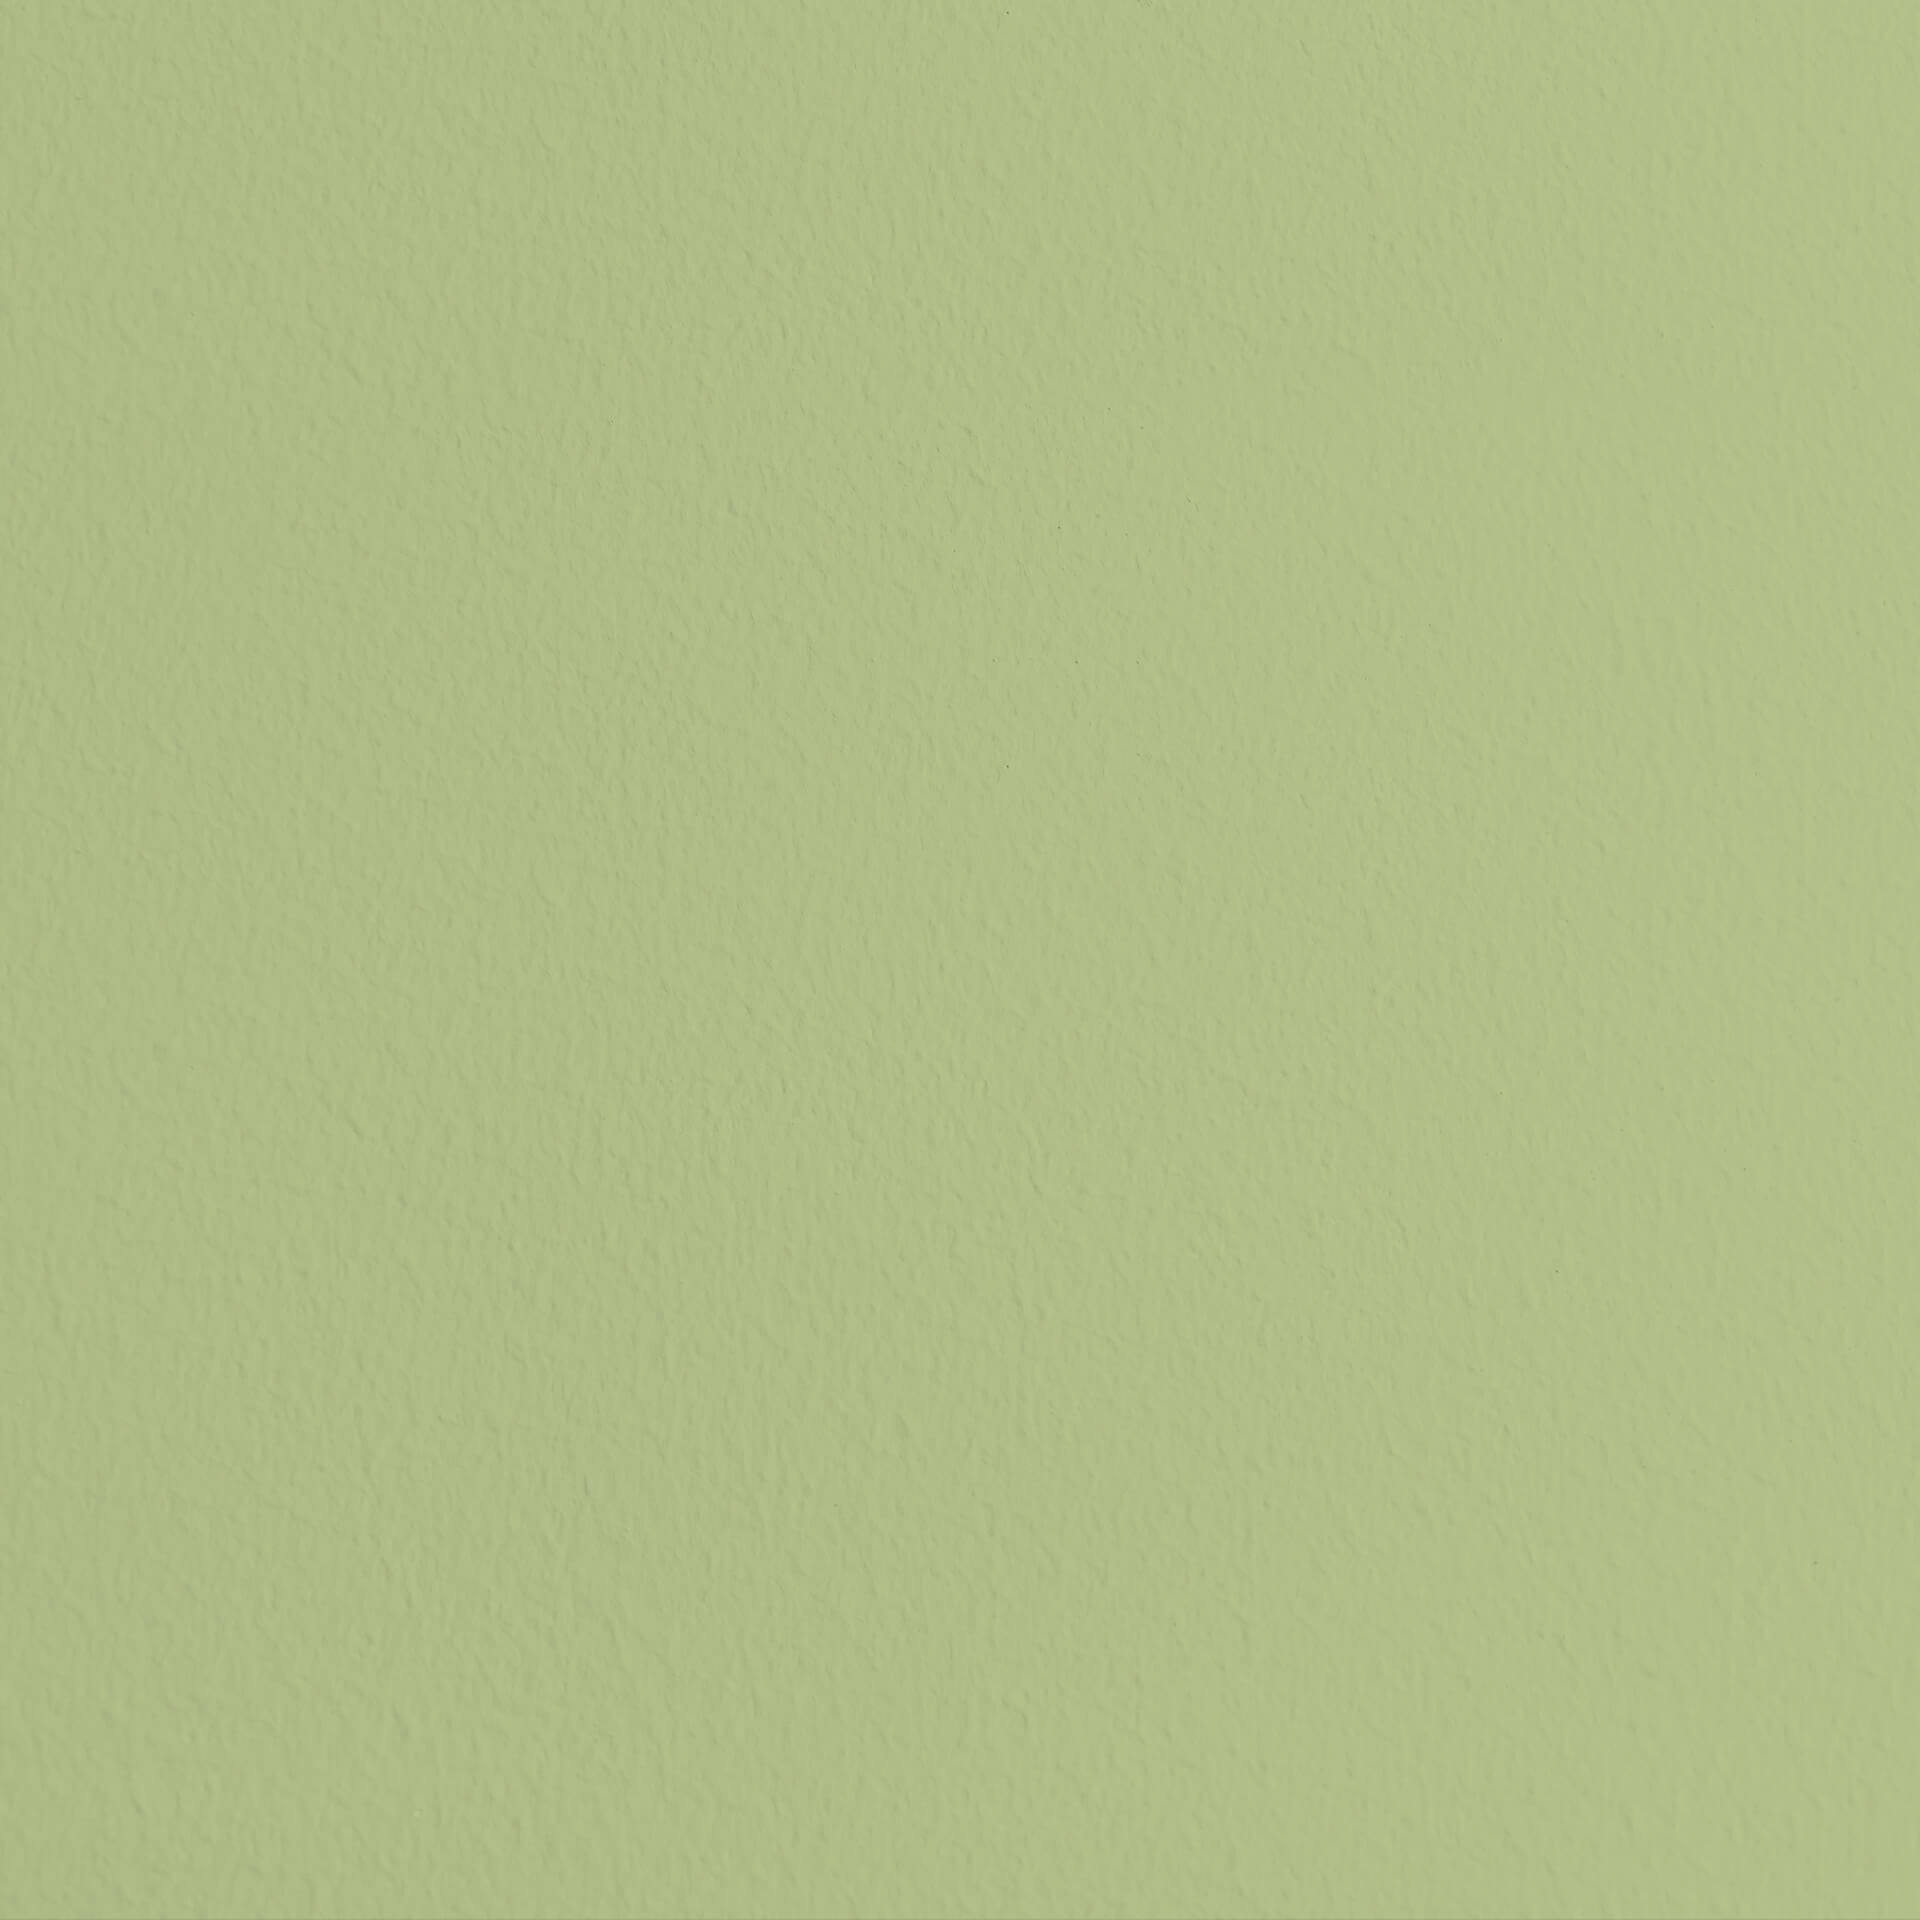 Mylands French Green No. 187 - Marble Matt Emulsion / Wandfarbe, 2.5L